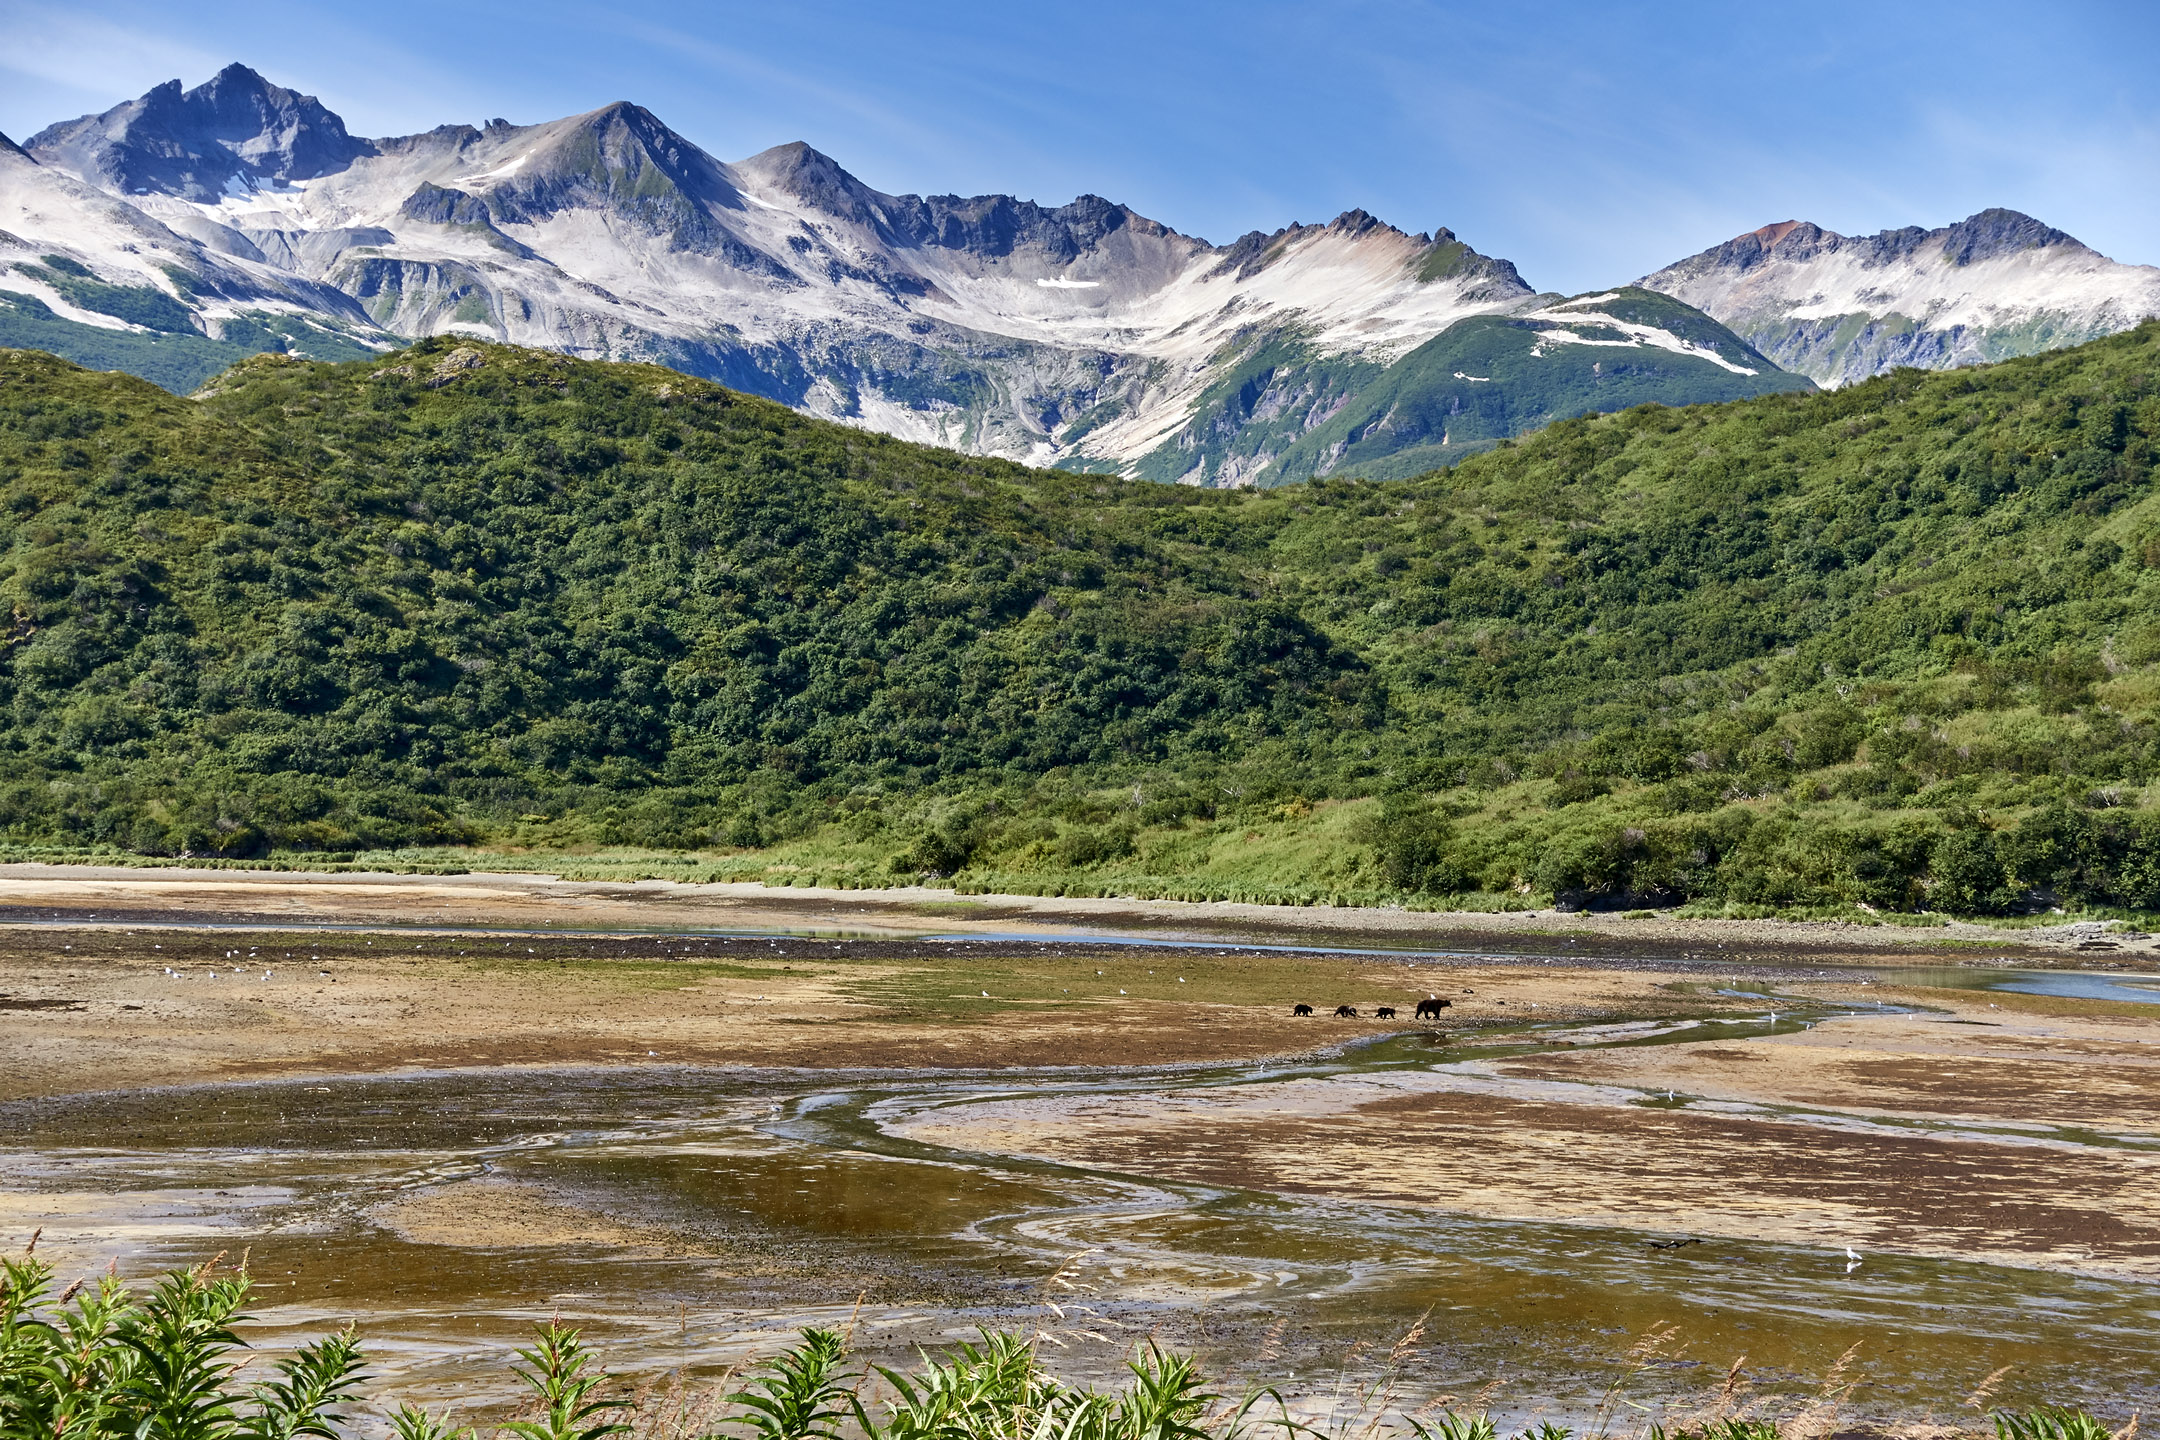 Katmai National Park Alaska